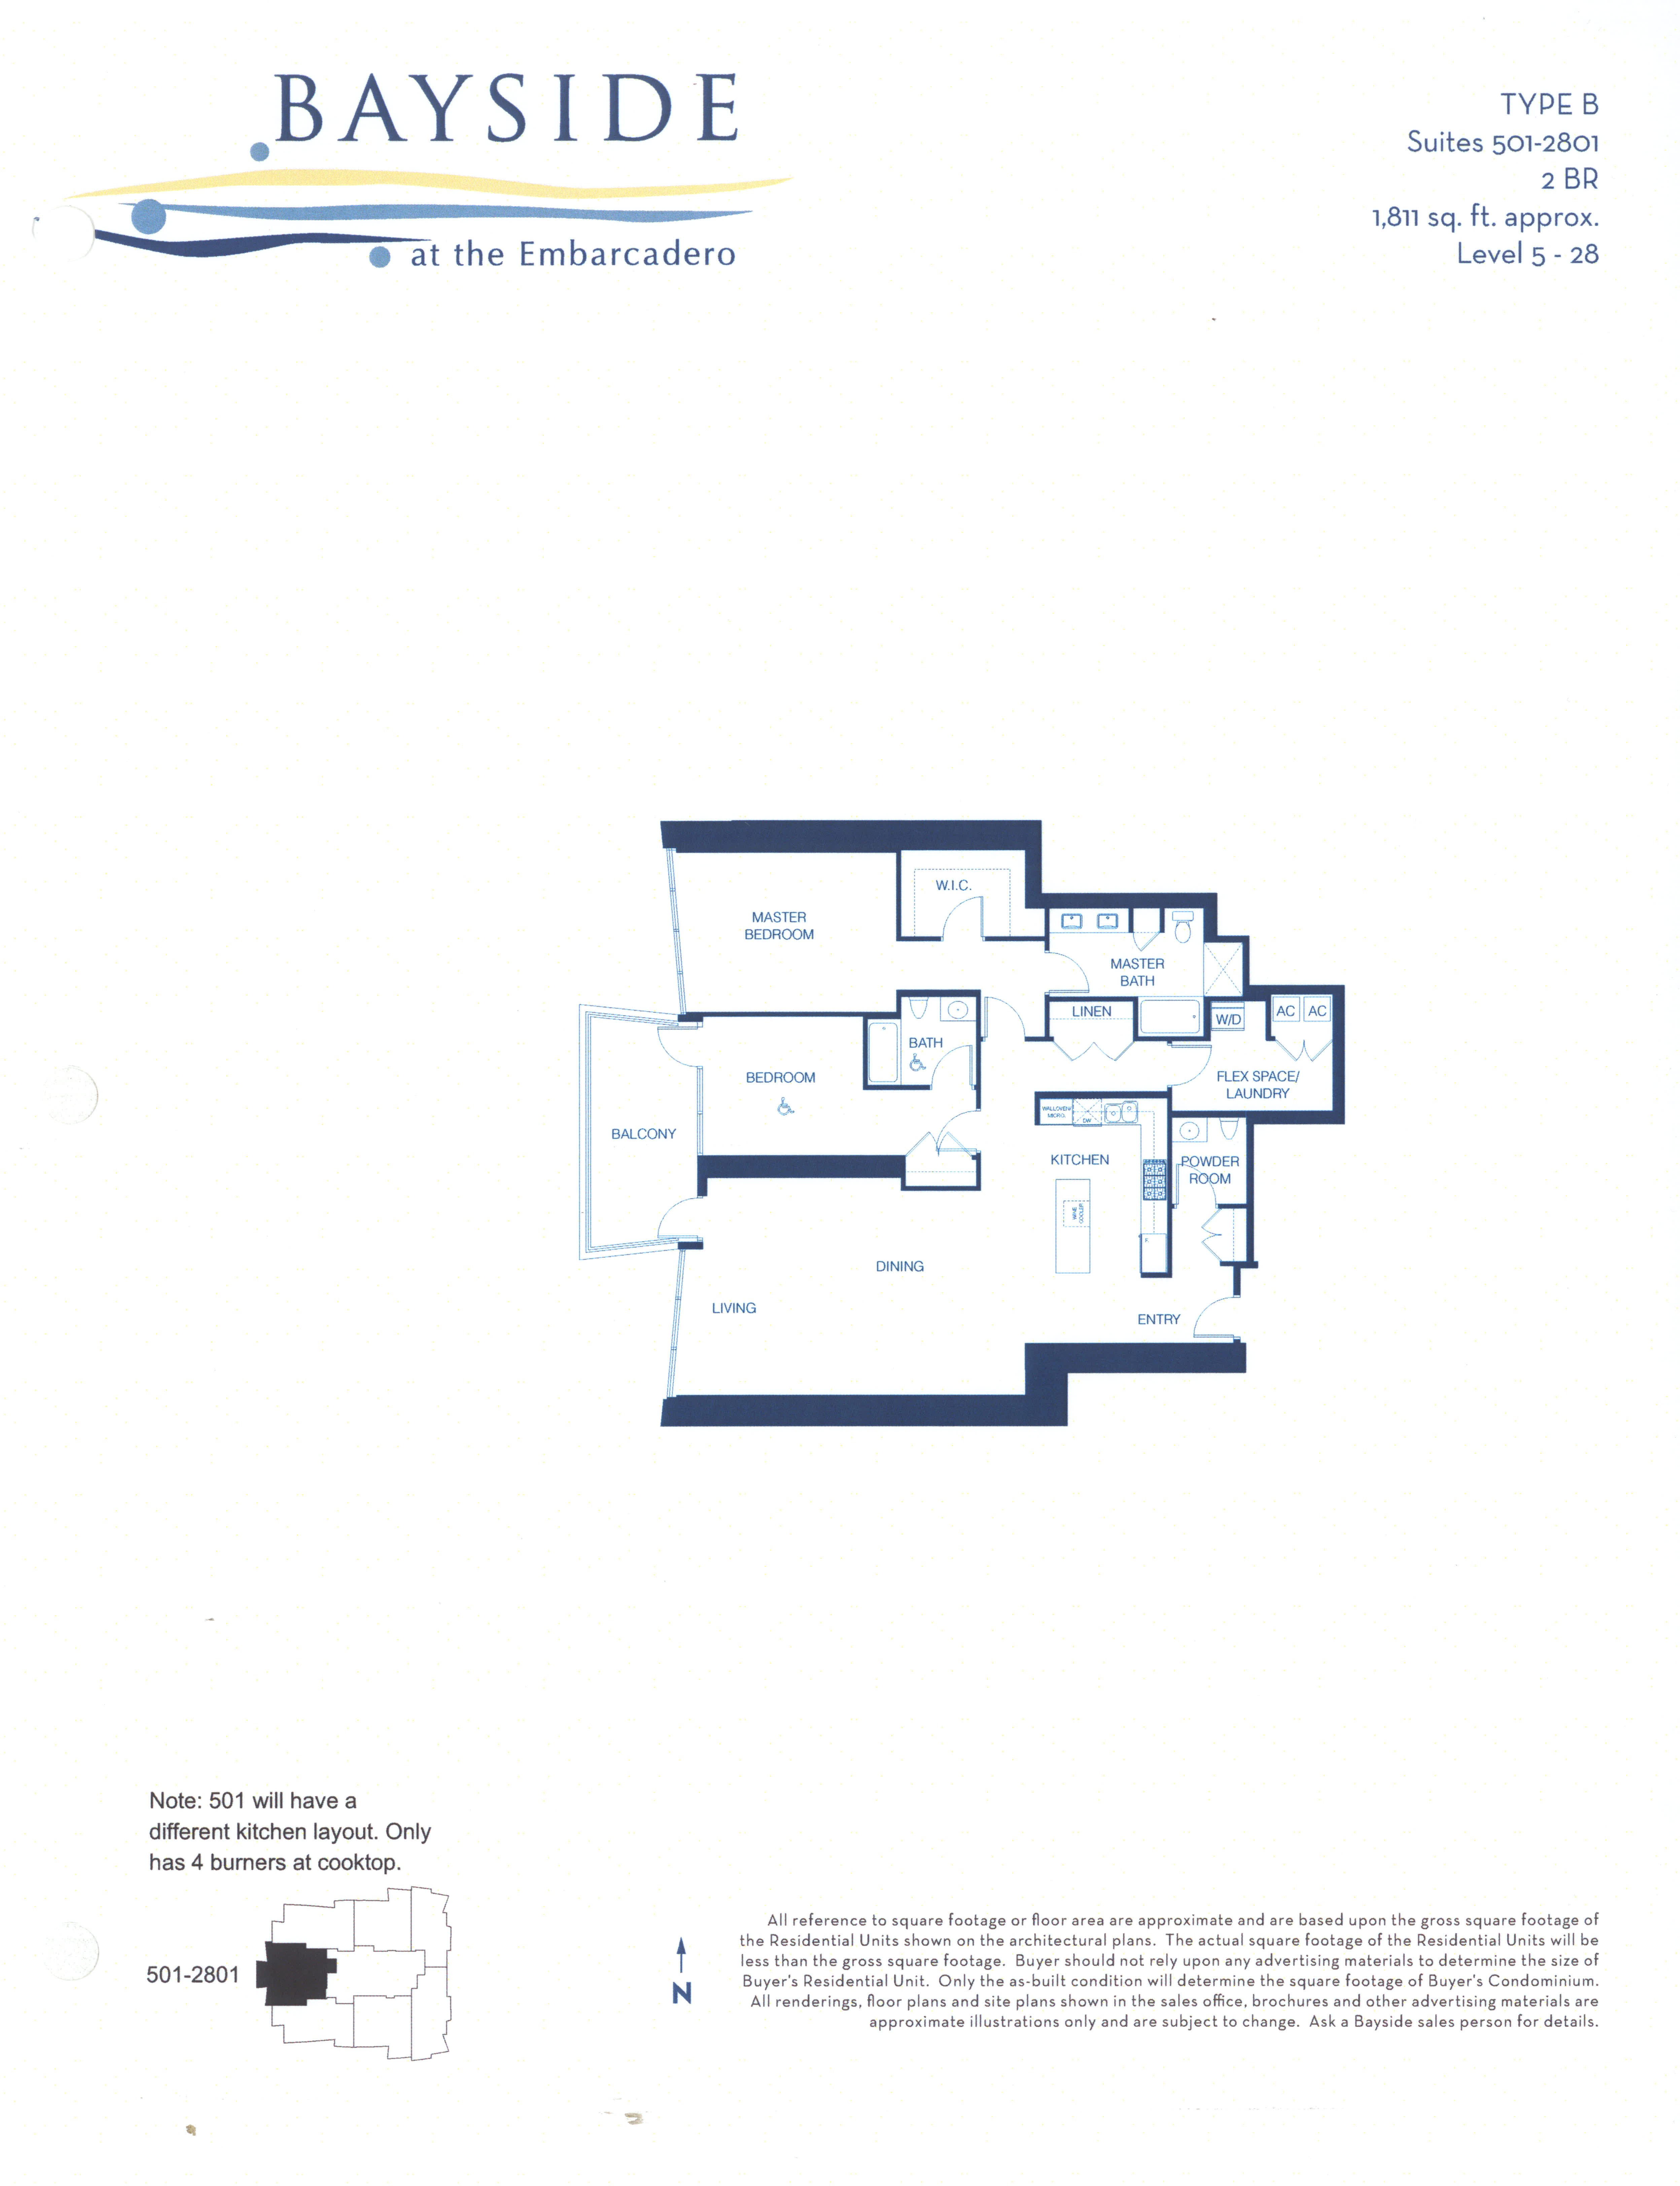 Bayside Floor Plan Level 5- 28 Type B